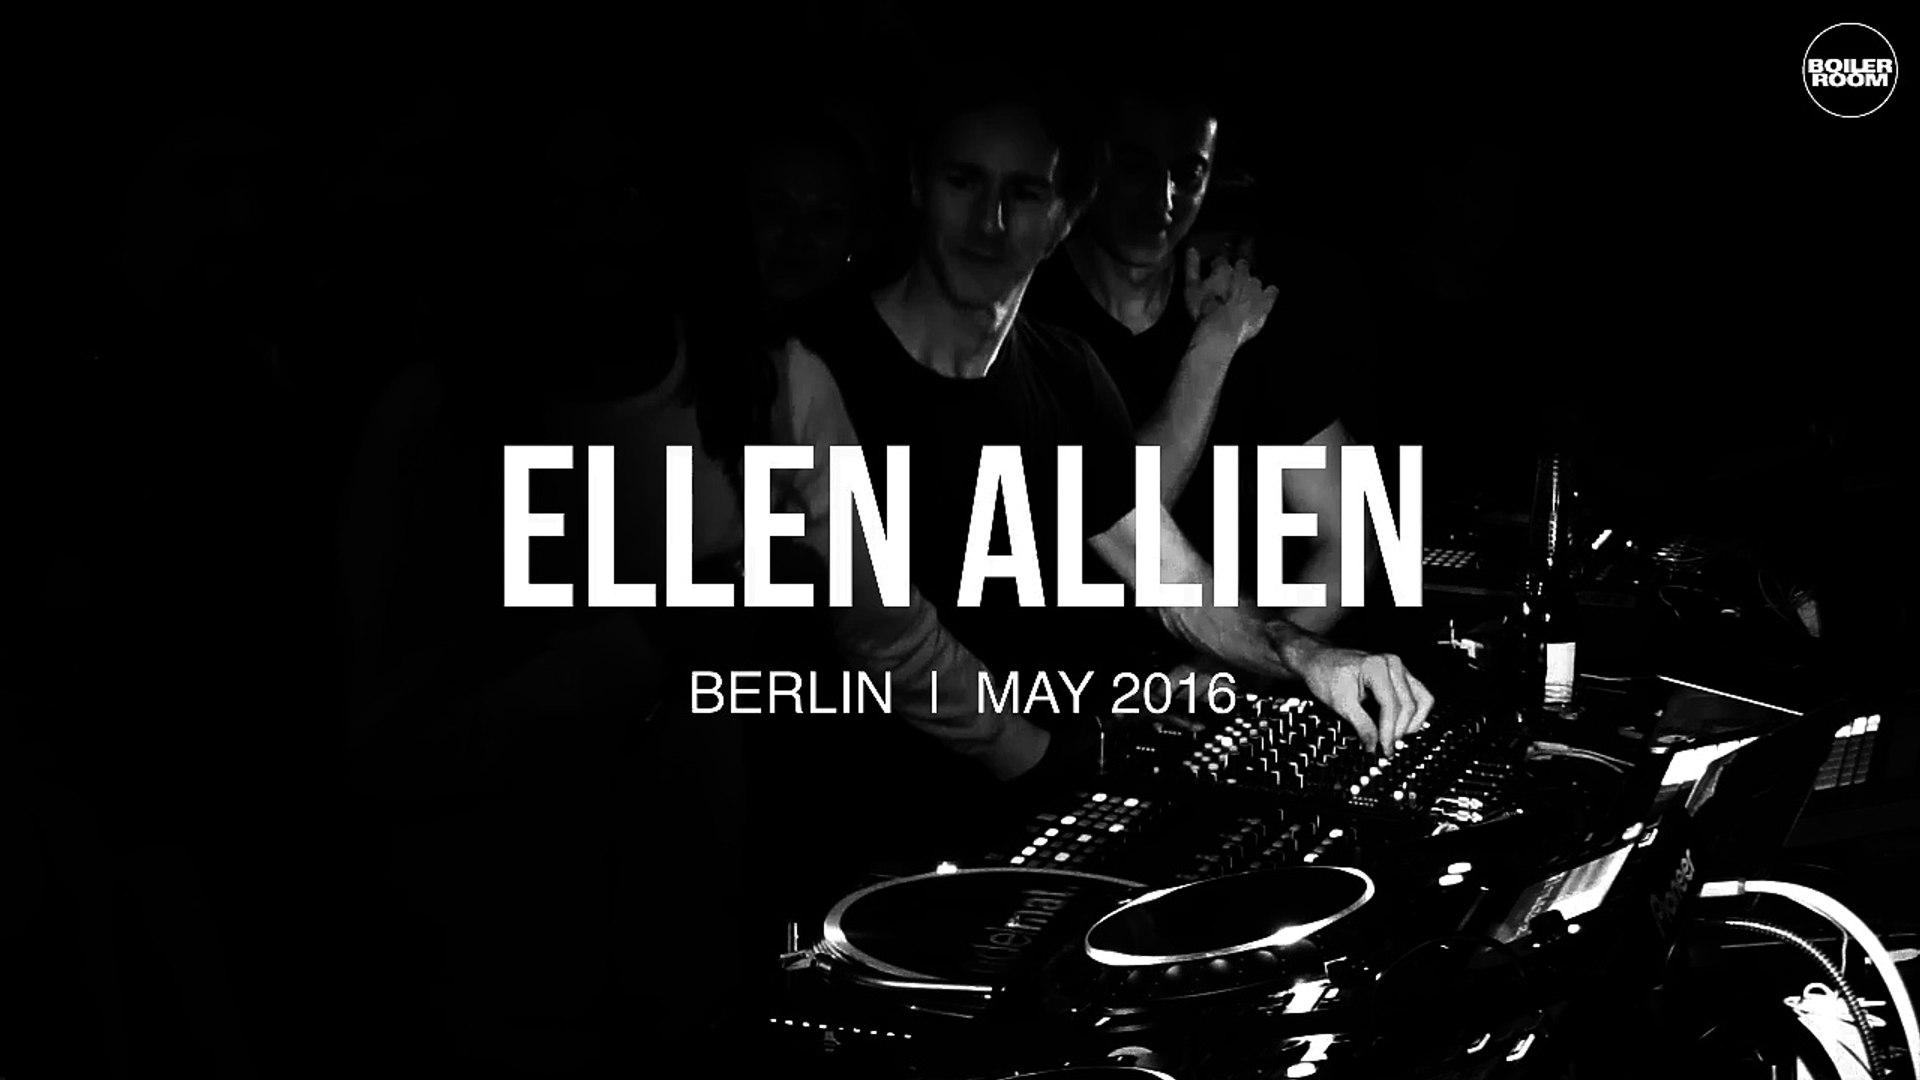 PLAYdifferently: Ellen Allien Boiler Room Berlin DJ Set - video Dailymotion